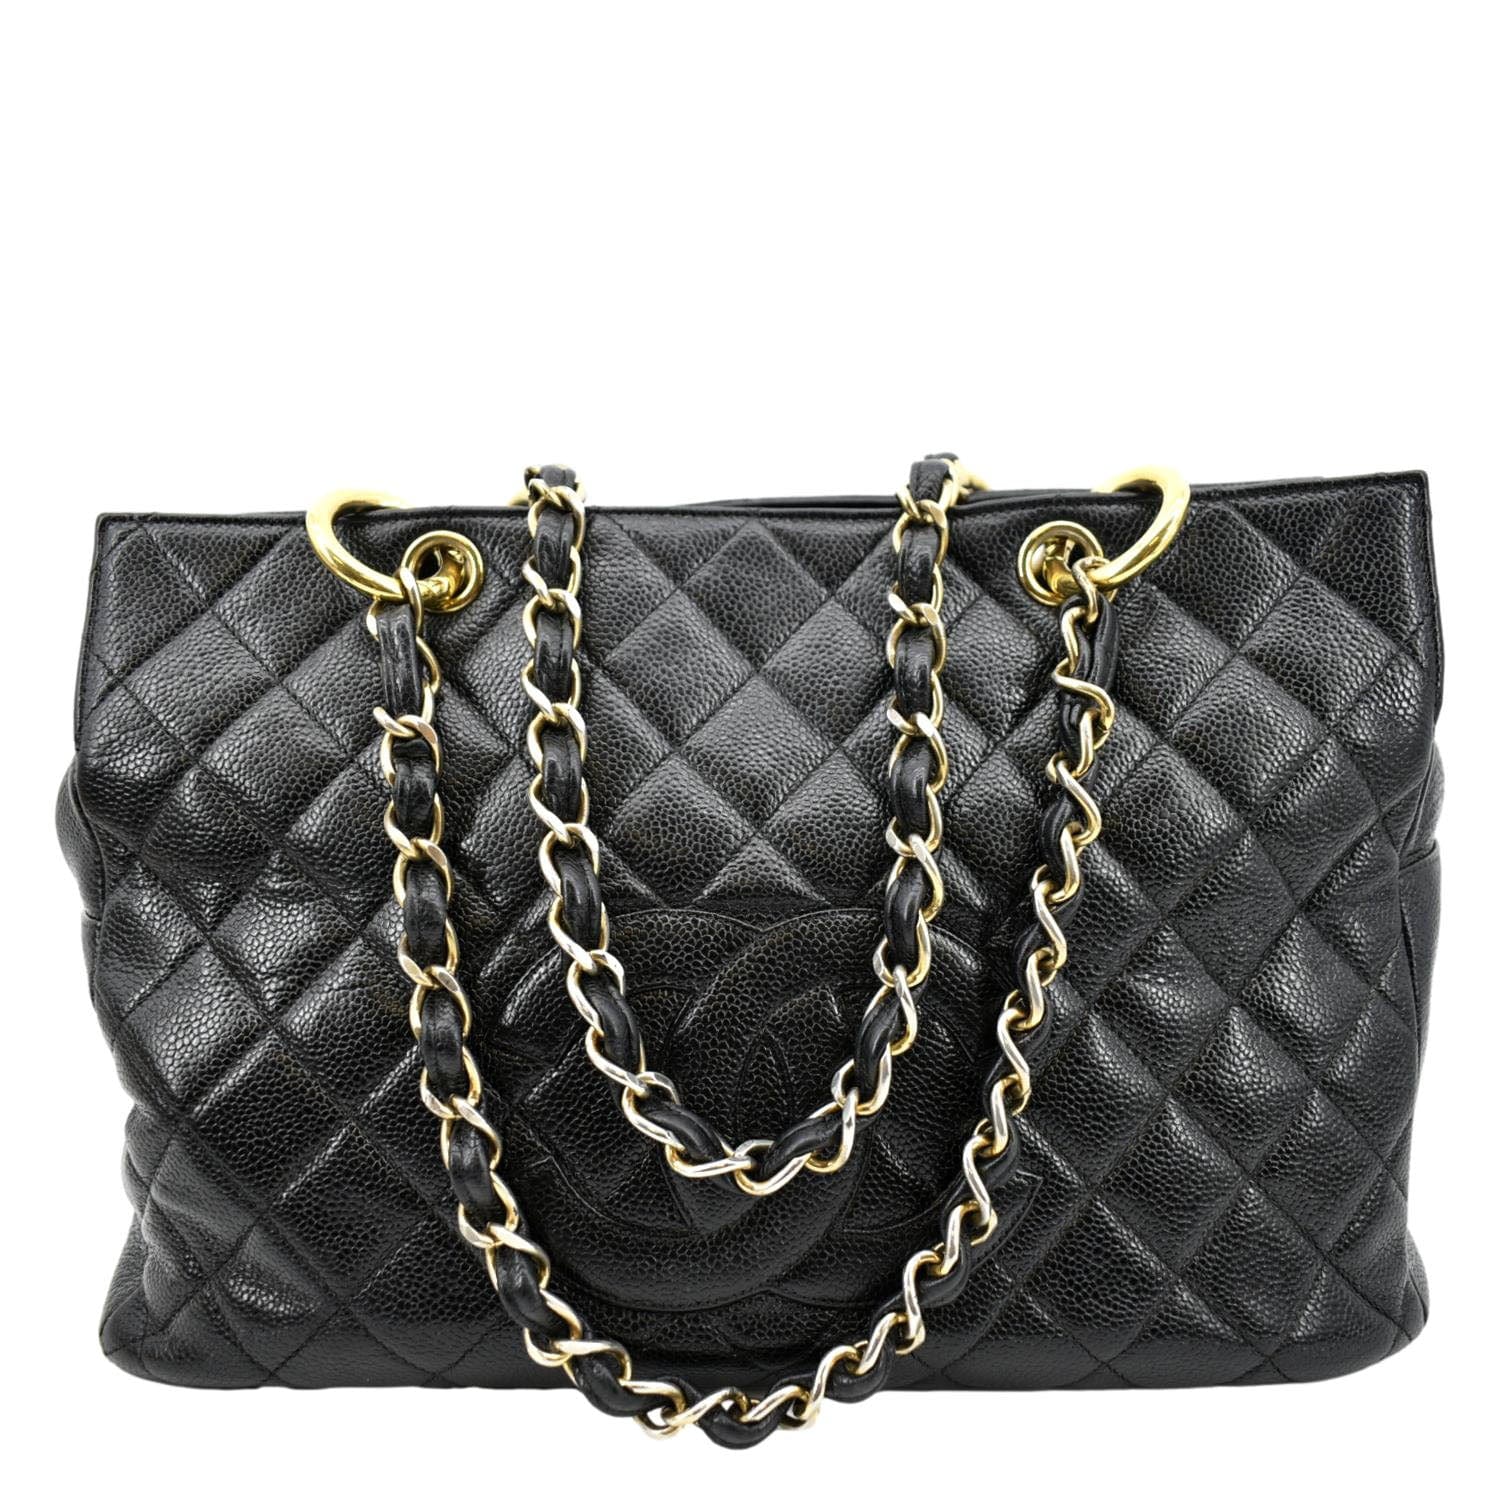 Best Deals for Chanel Gst Bag Price